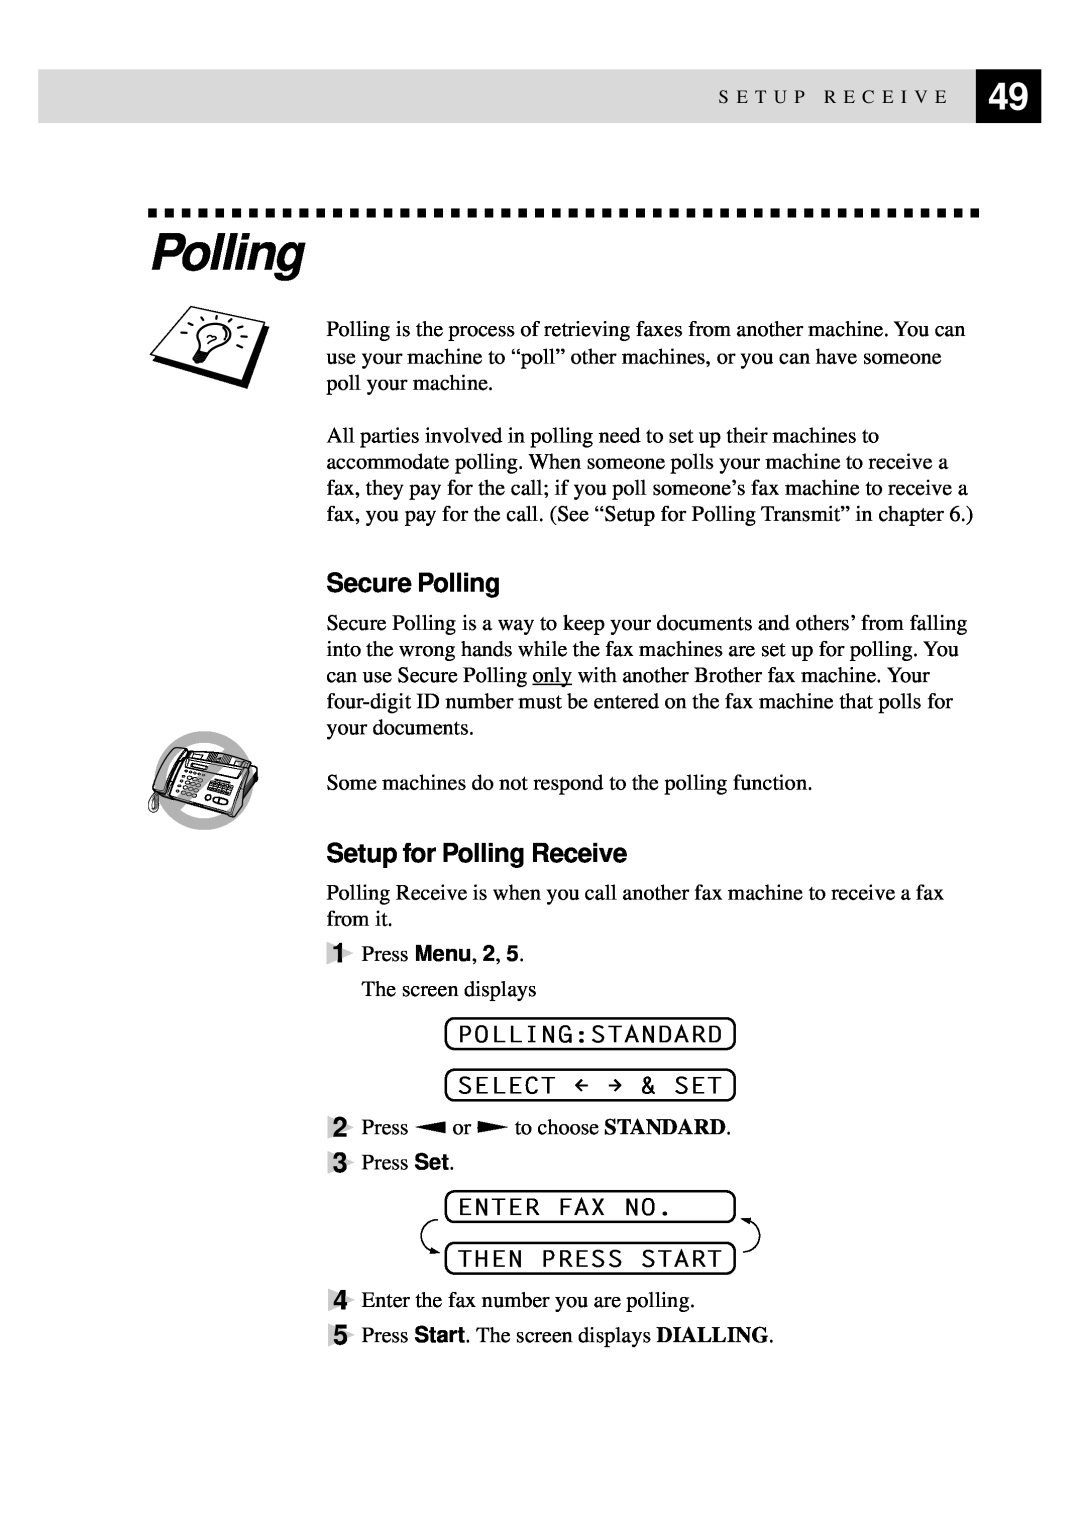 Brother 515 Secure Polling, Setup for Polling Receive, Pollingstandard Select & Set, Enter Fax No Then Press Start 